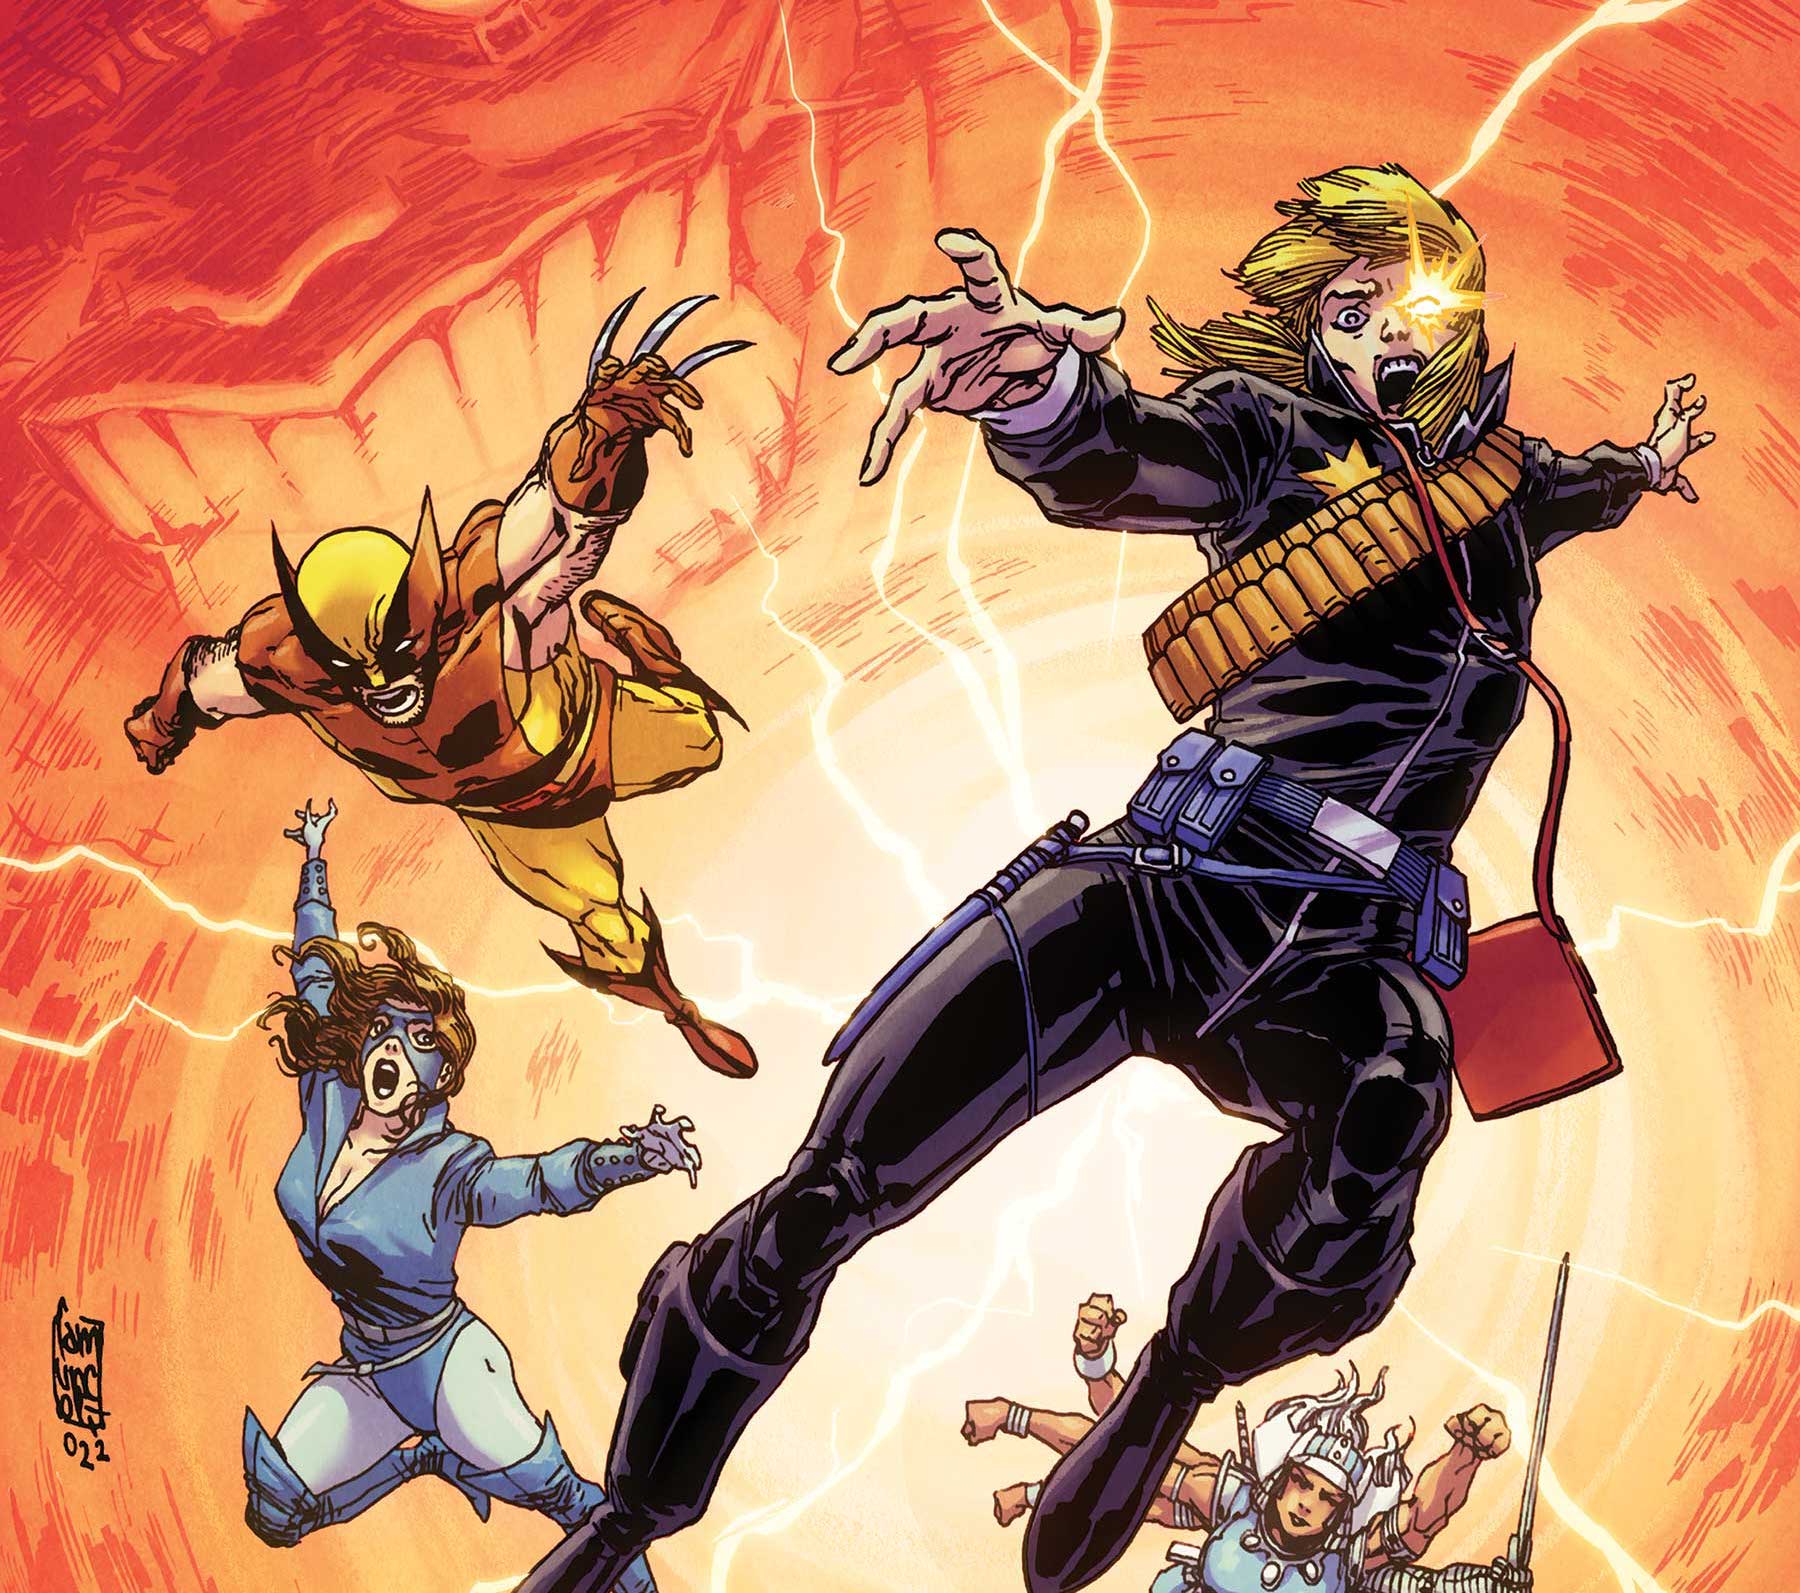 Ann Nocenti heads up 'X-Men Legends' #3 featuring Longshot